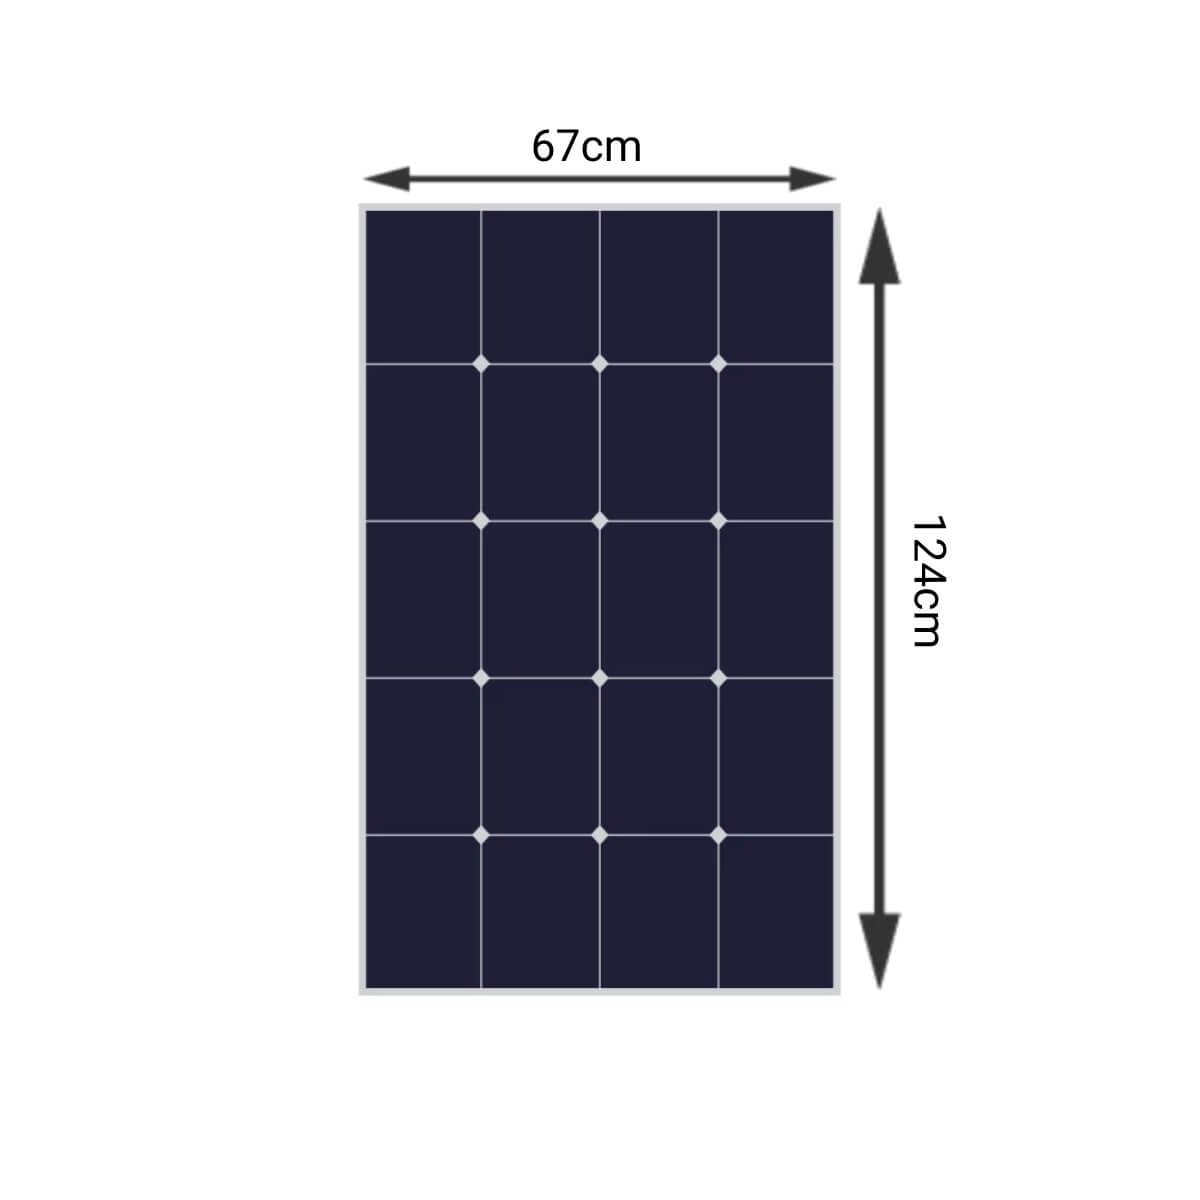 300W Solar Panel Kit – 2x 150W dimensions